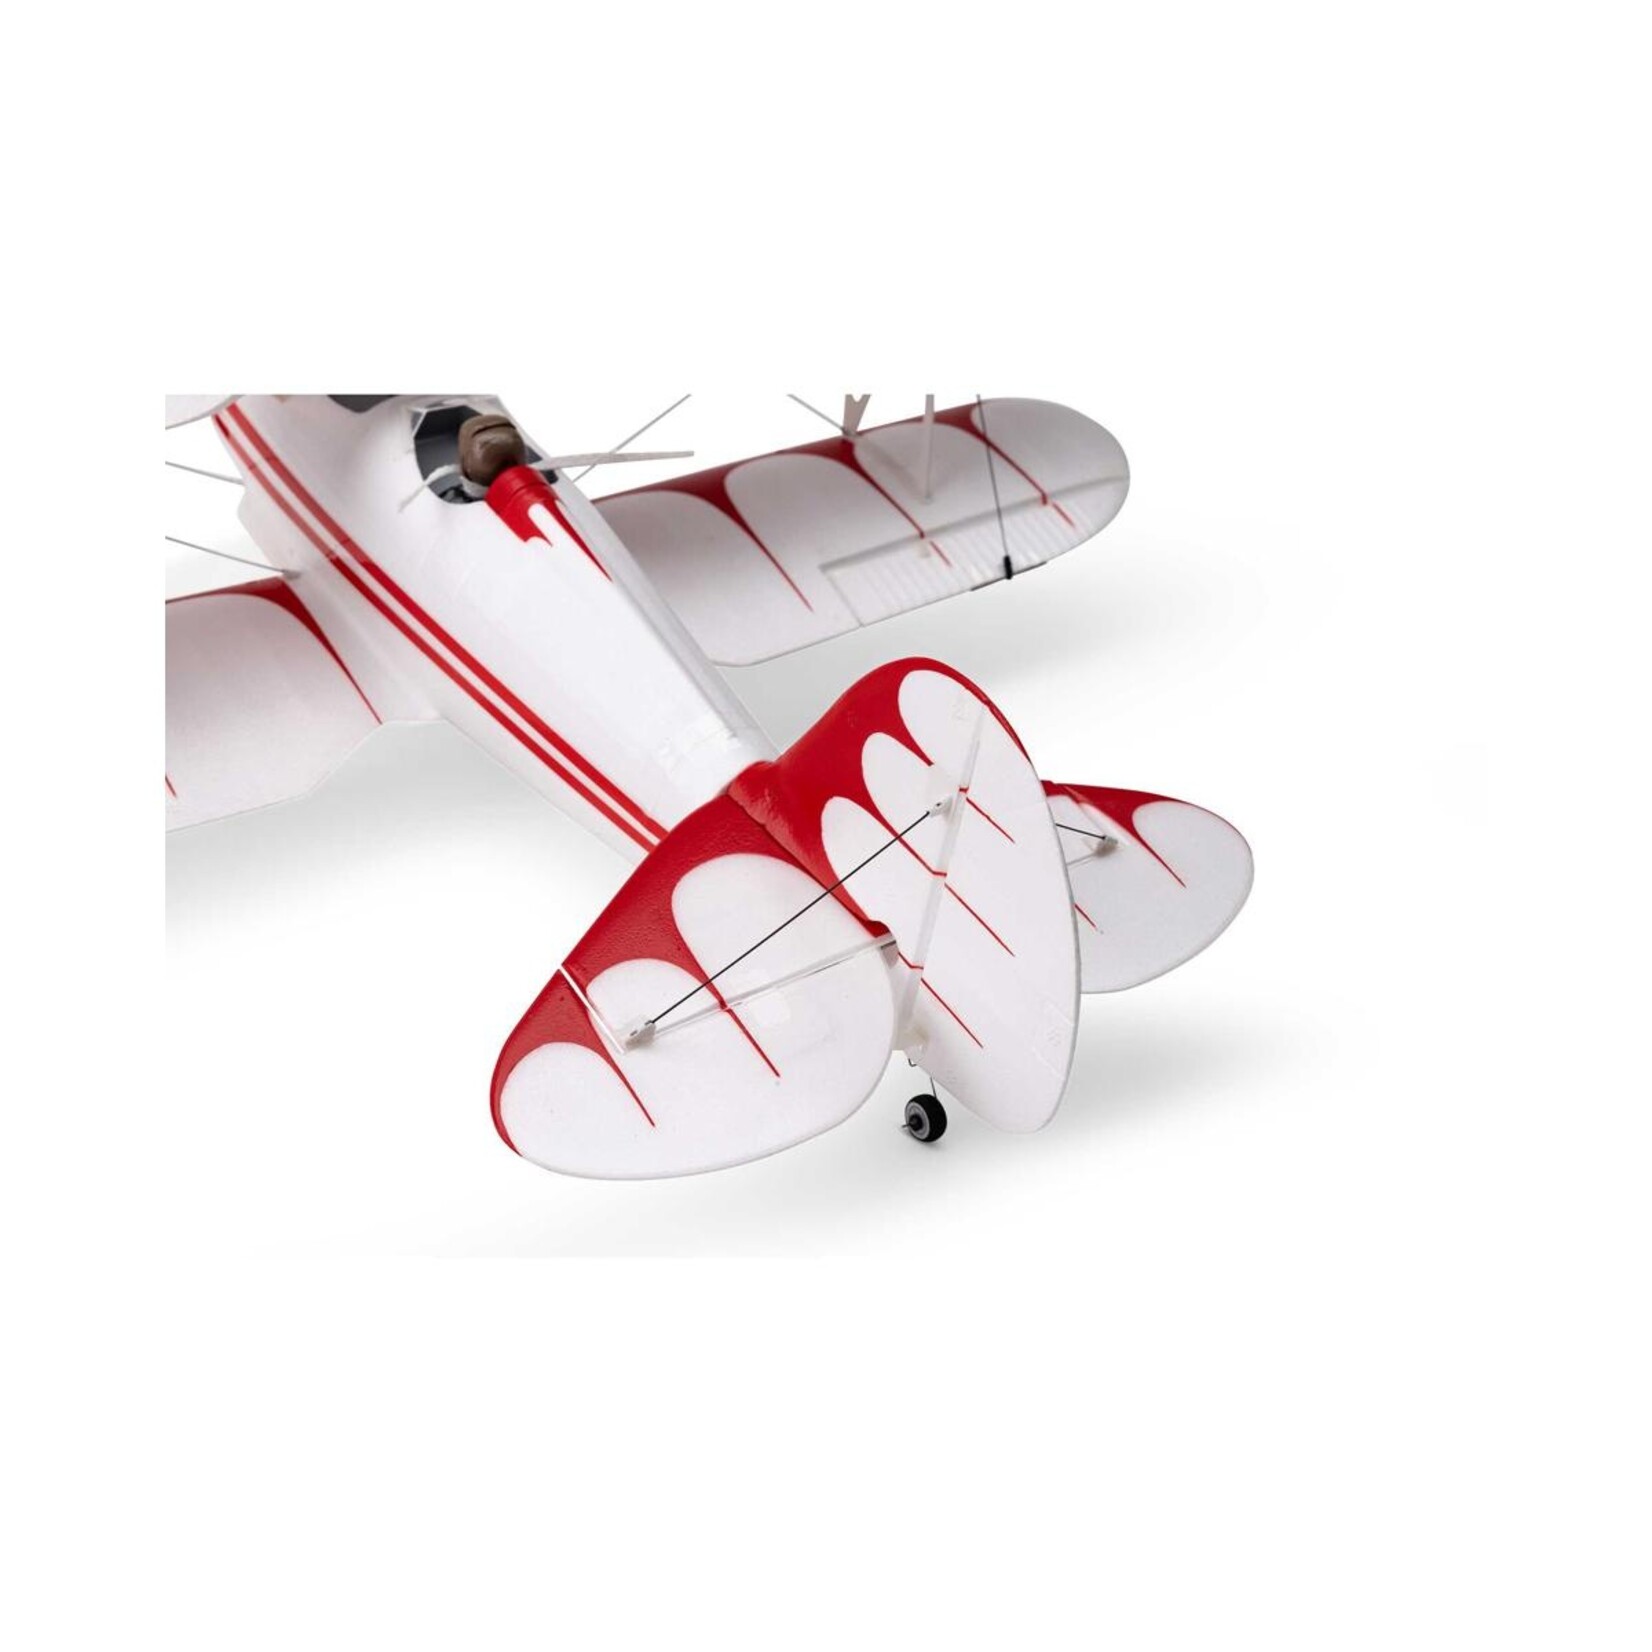 E-flite E-flite Ultra-Micro UMX Waco BNF Basic Electric Airplane (550mm) (White) w/AS3X & SAFE #EFLU53550